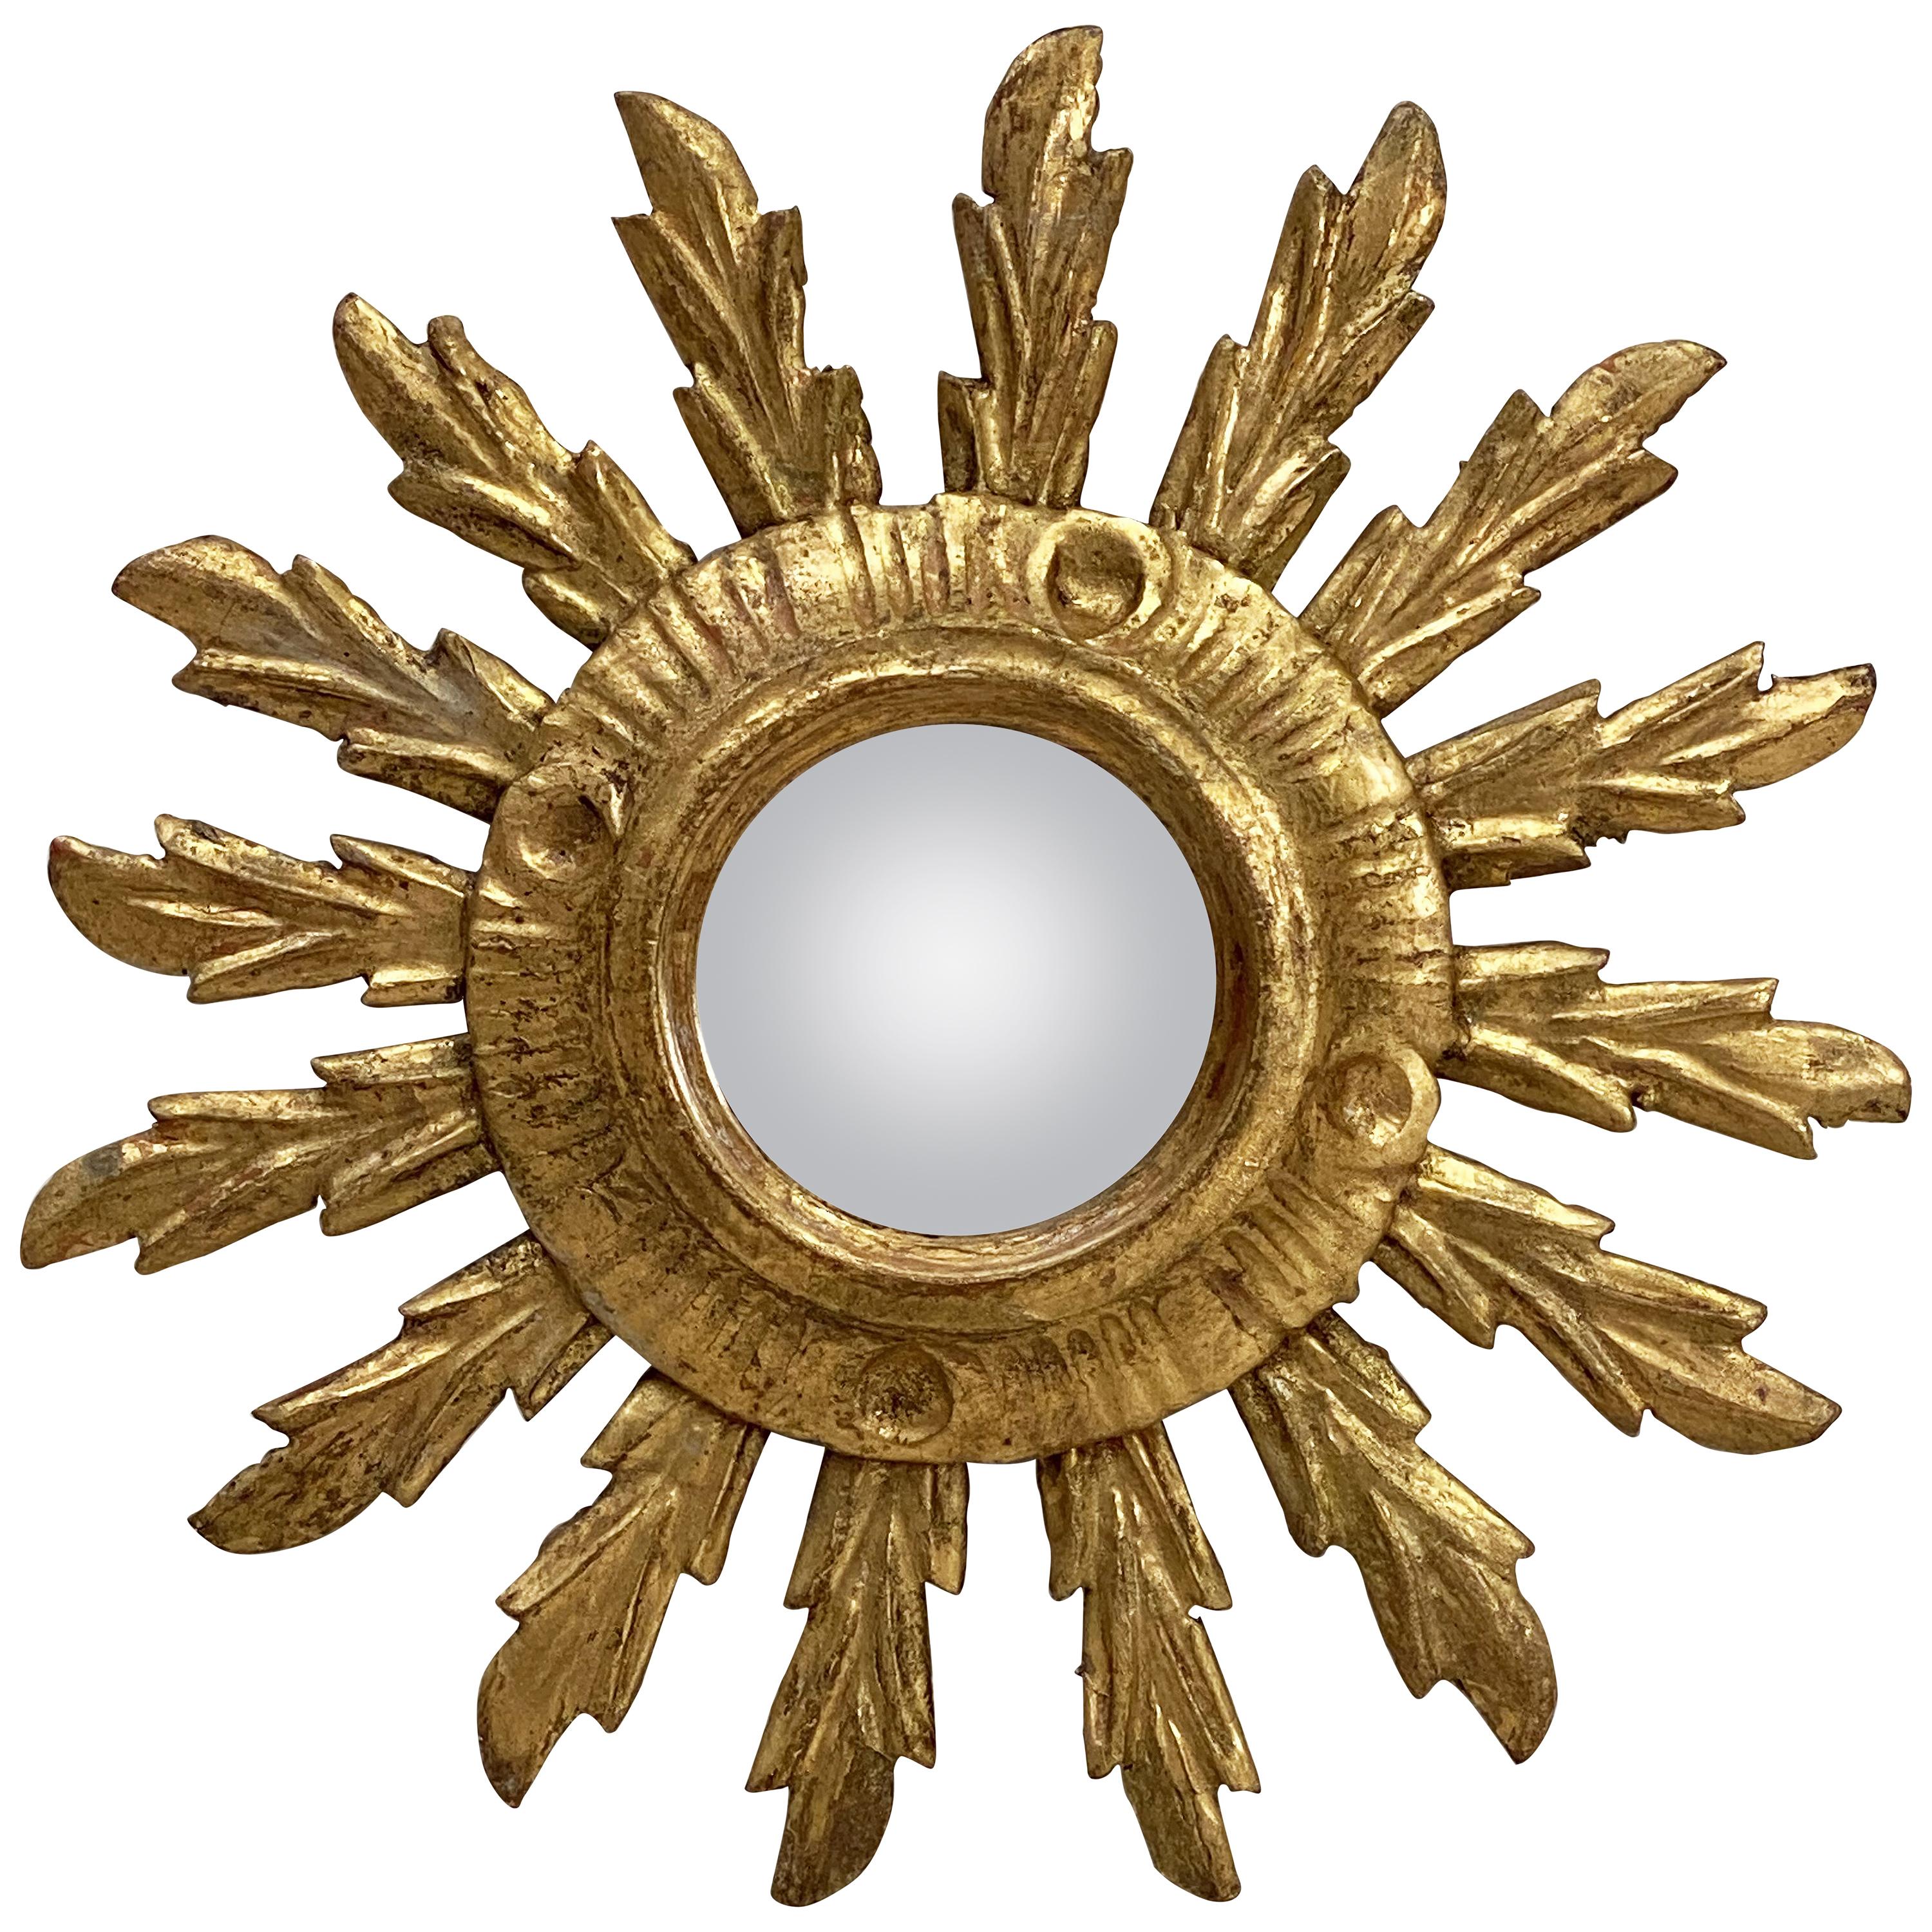 Small French Gilt Starburst or Sunburst Convex Mirror (Diameter 9 1/2)